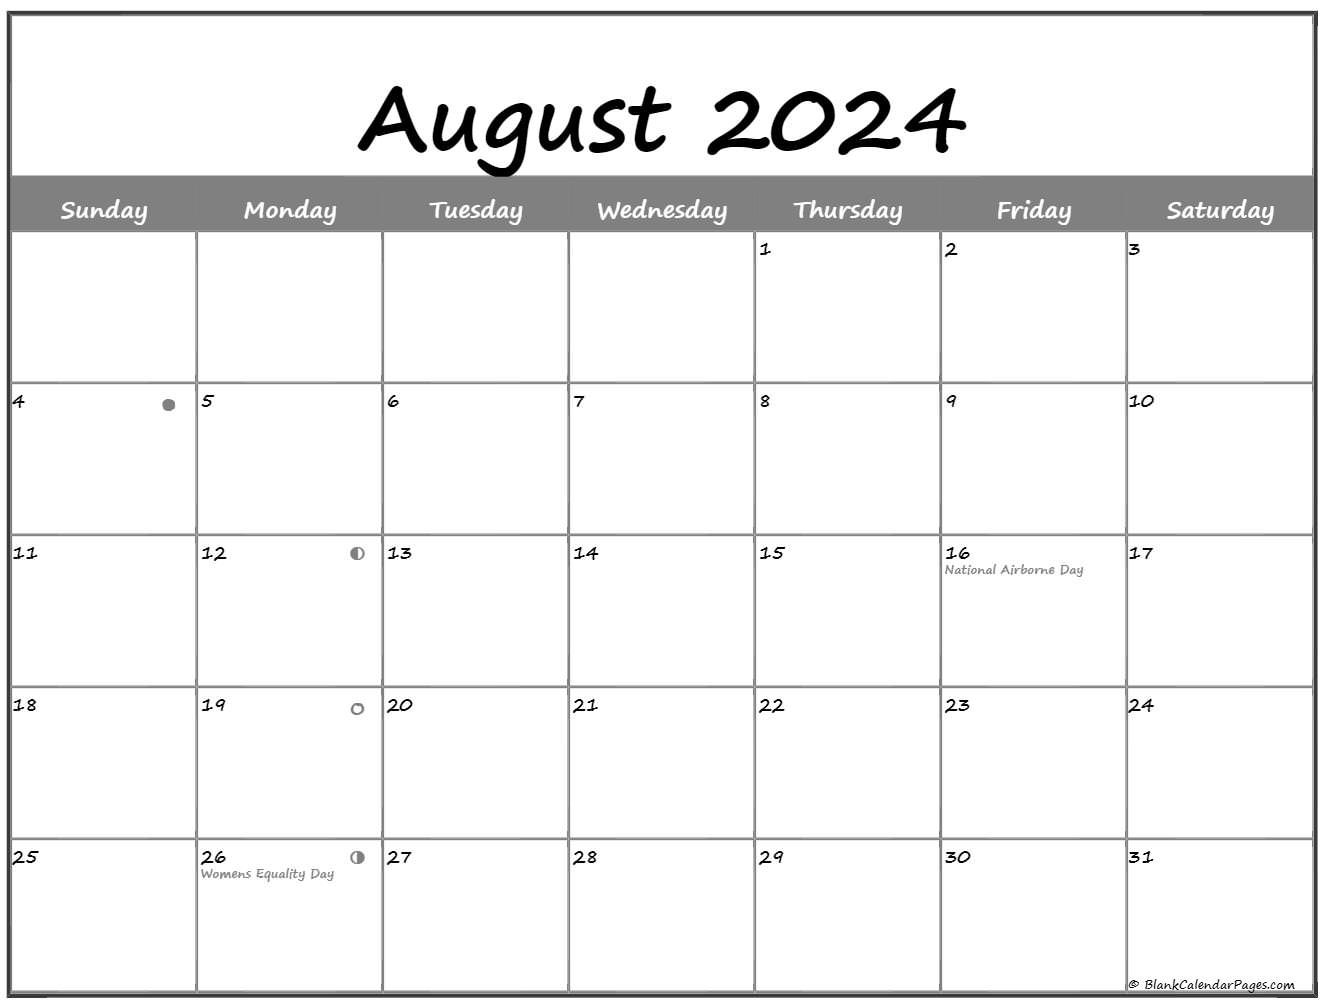 Moon Calendar July 2022 August 2022 Lunar Calendar | Moon Phase Calendar